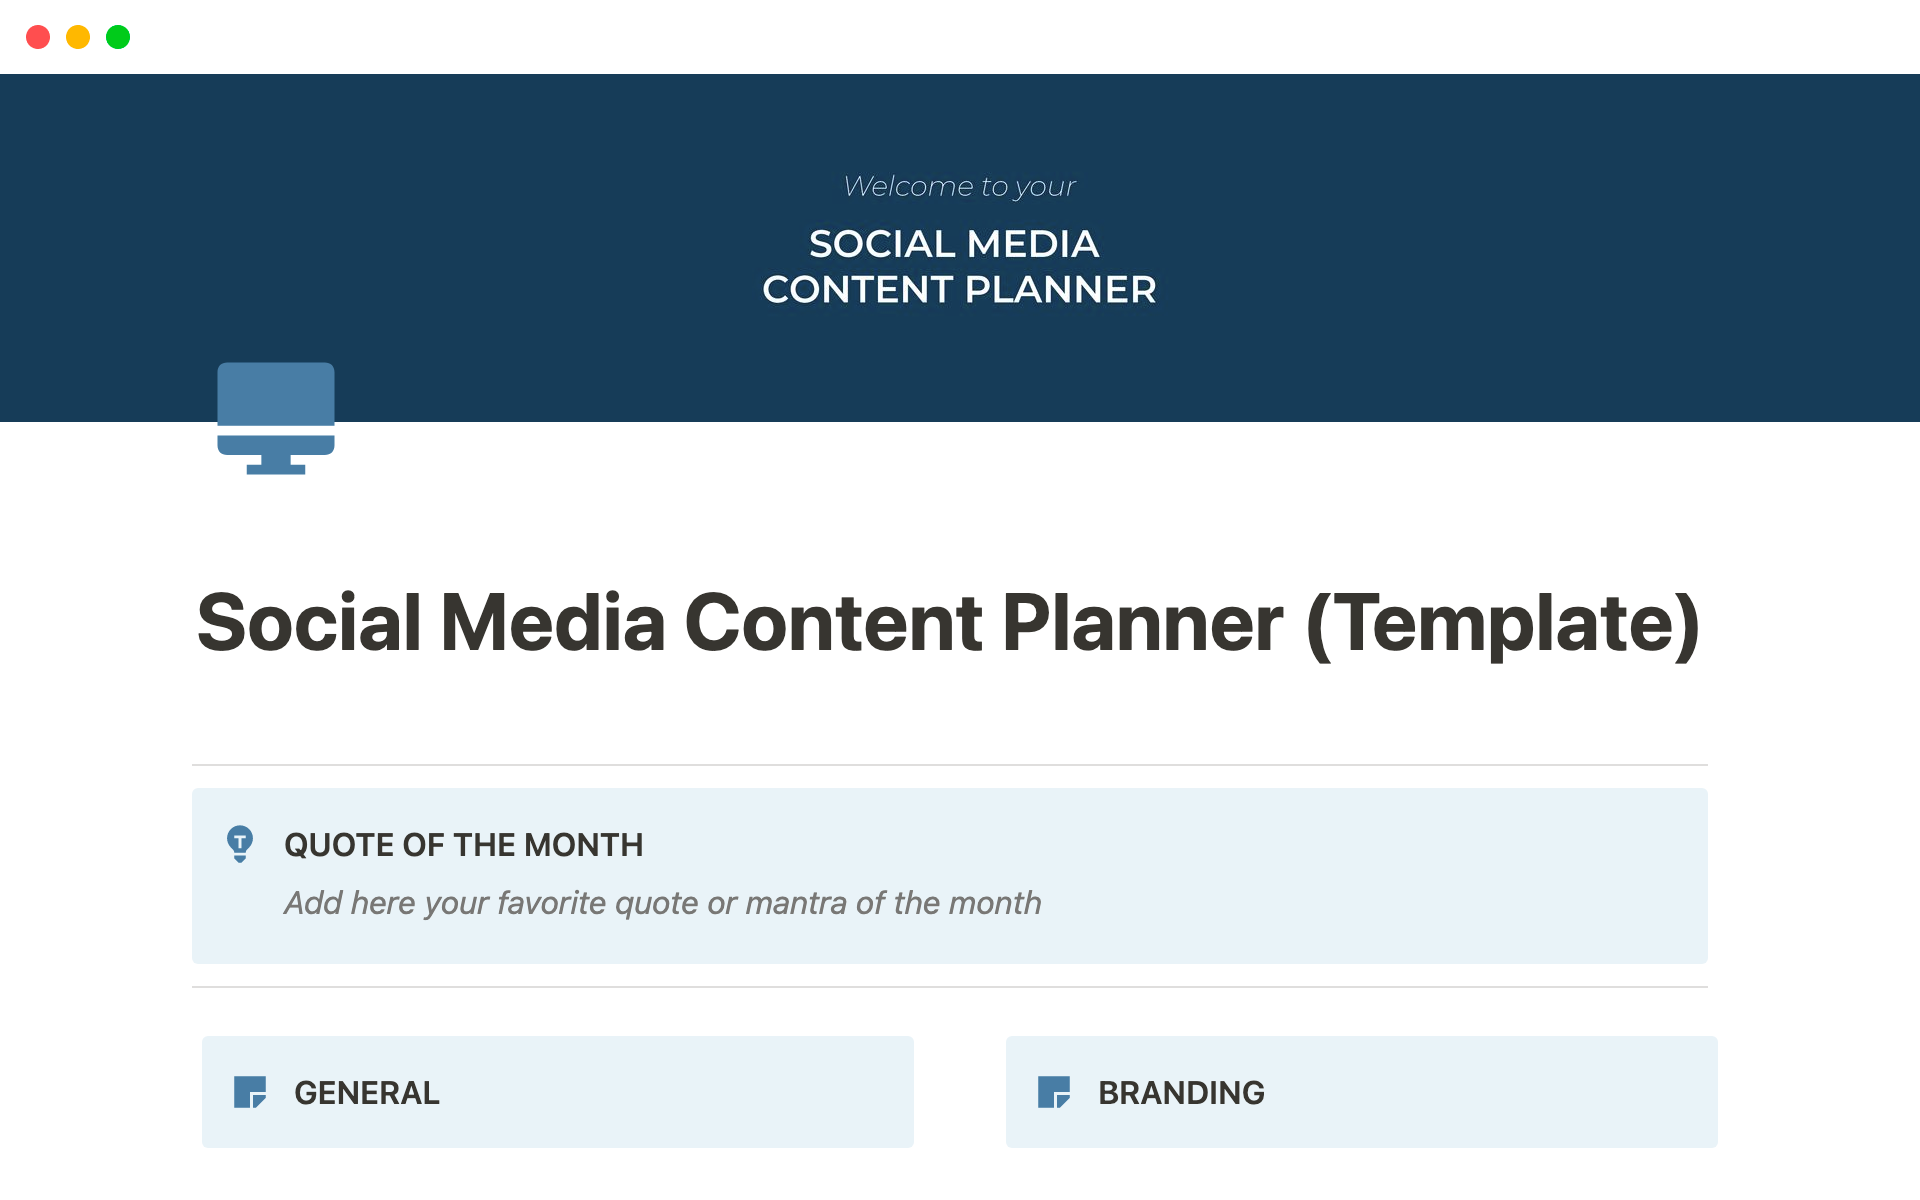 Eine Vorlagenvorschau für Social Media Content Planner: Unleash your social media potential with our content planner!